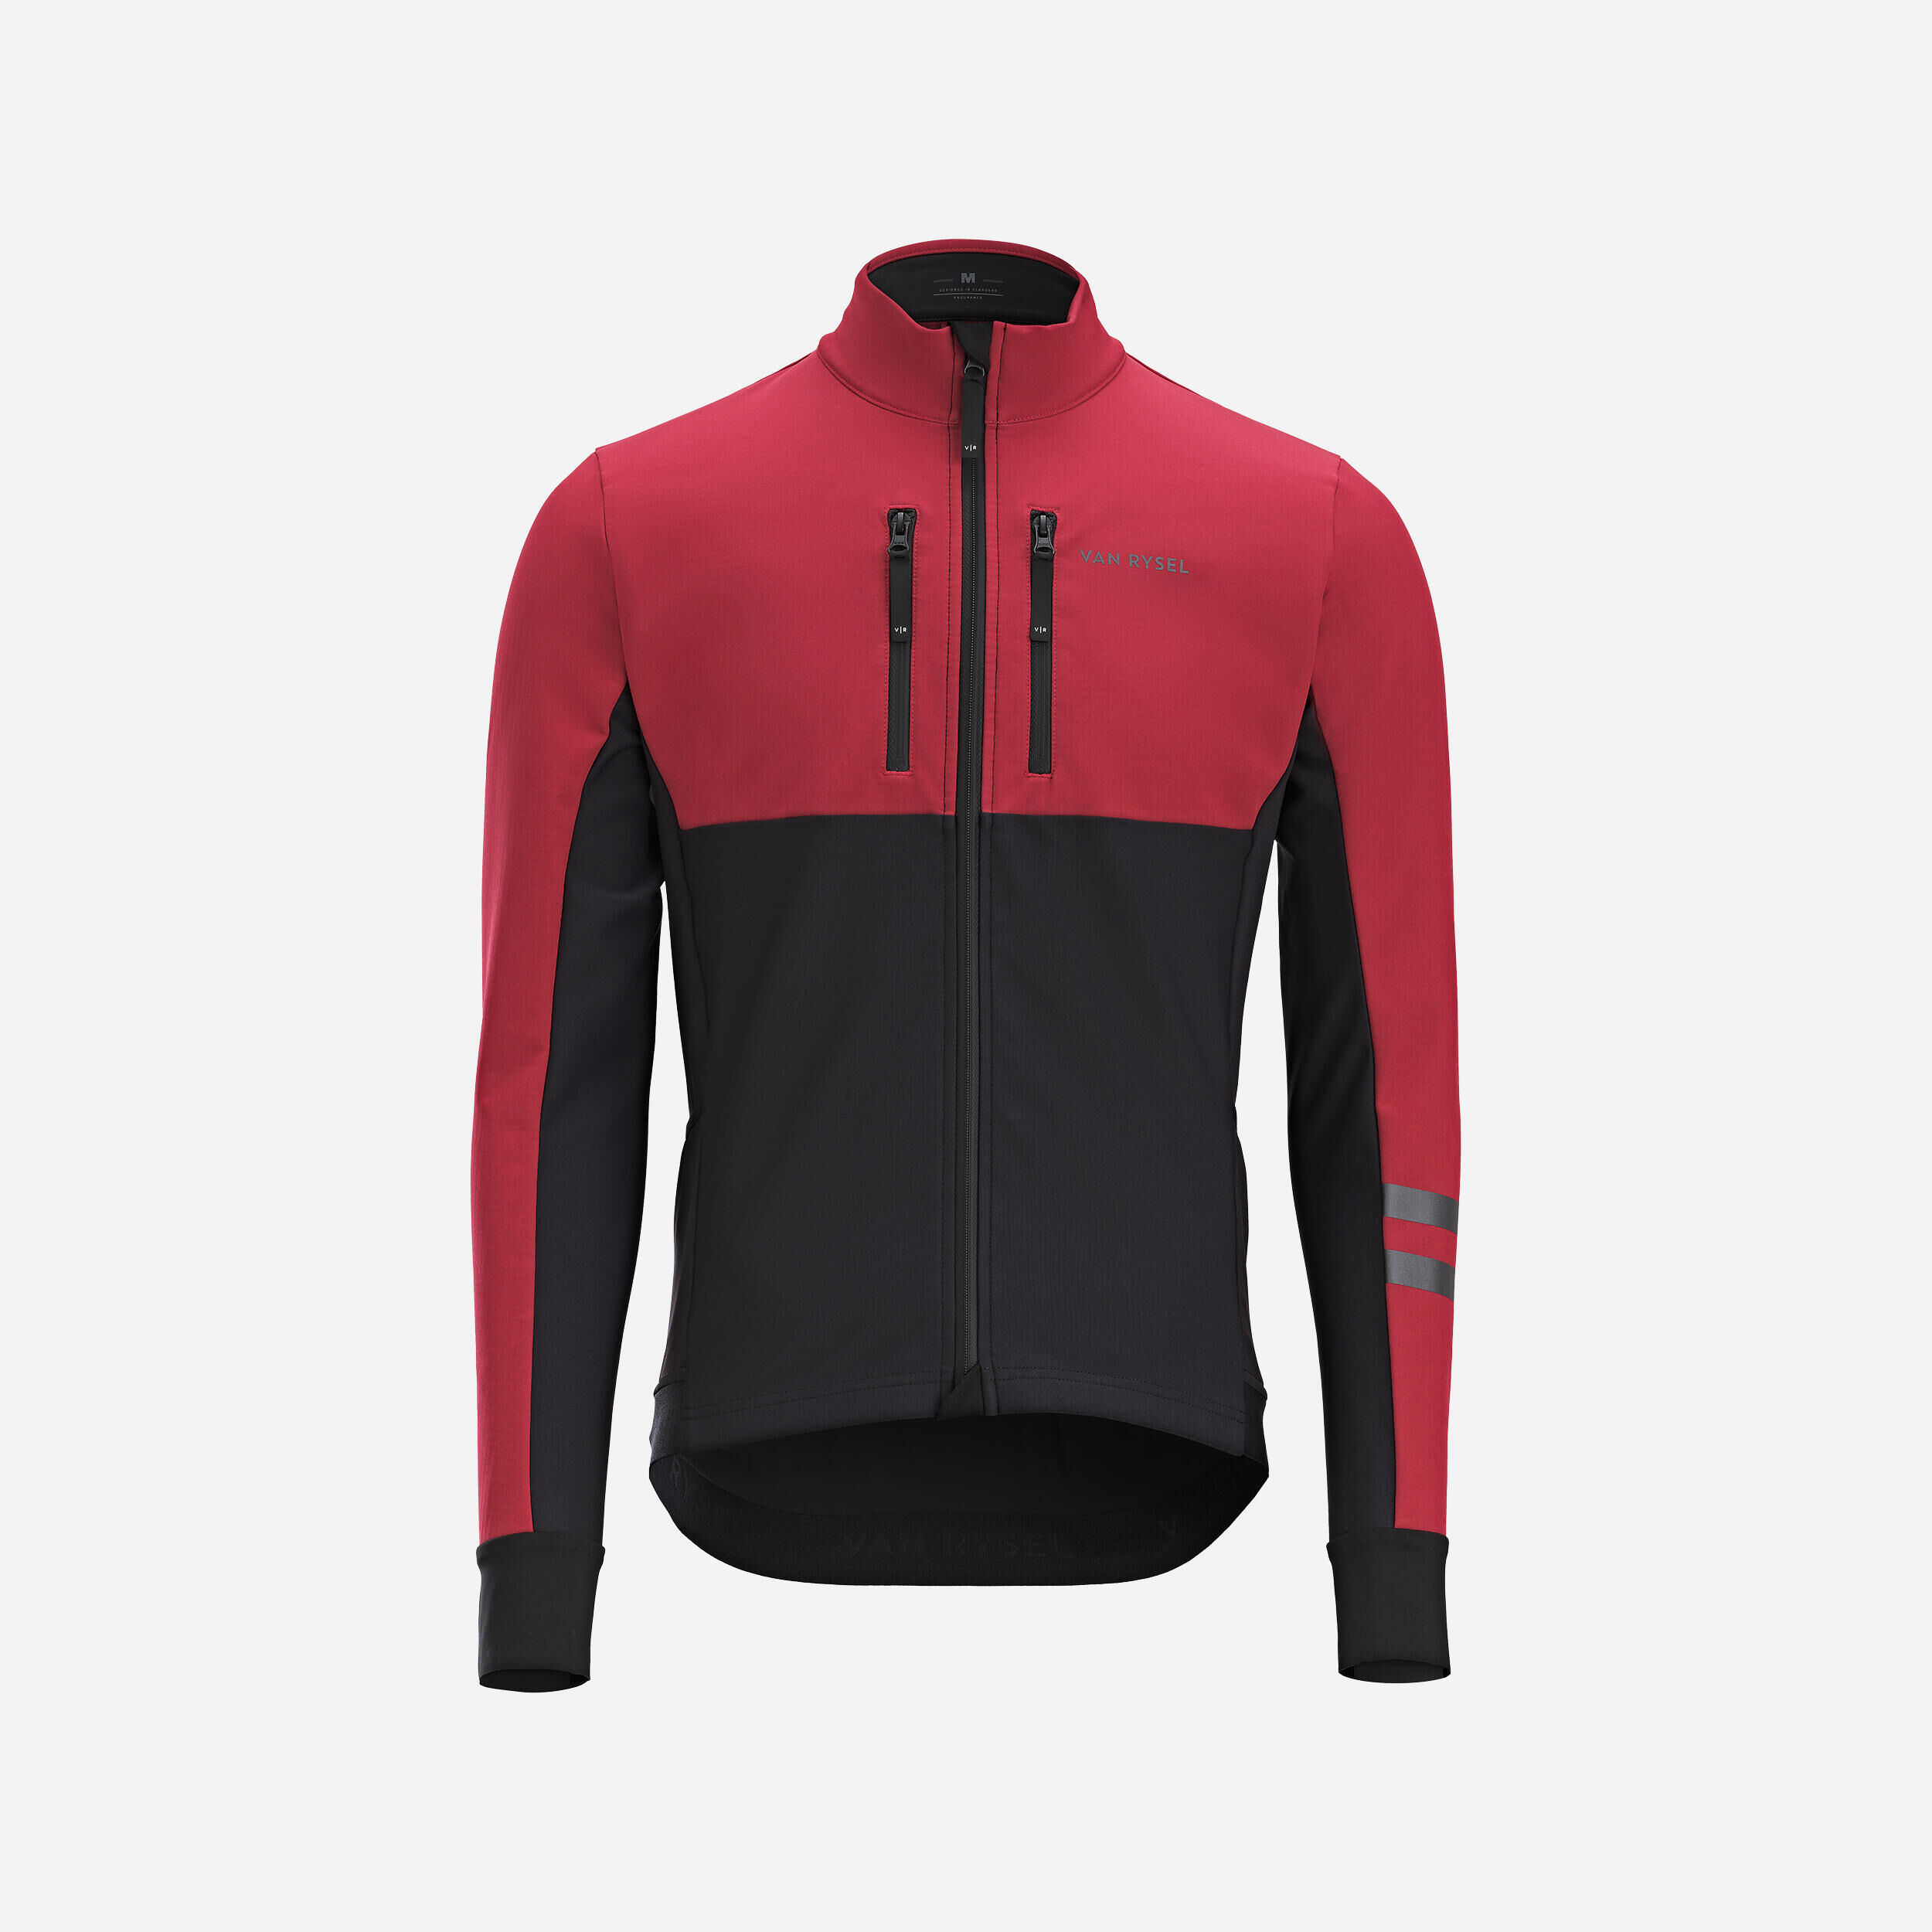 VAN RYSEL Men's Winter Road Cycling Jacket Endurance - Black/Burgundy